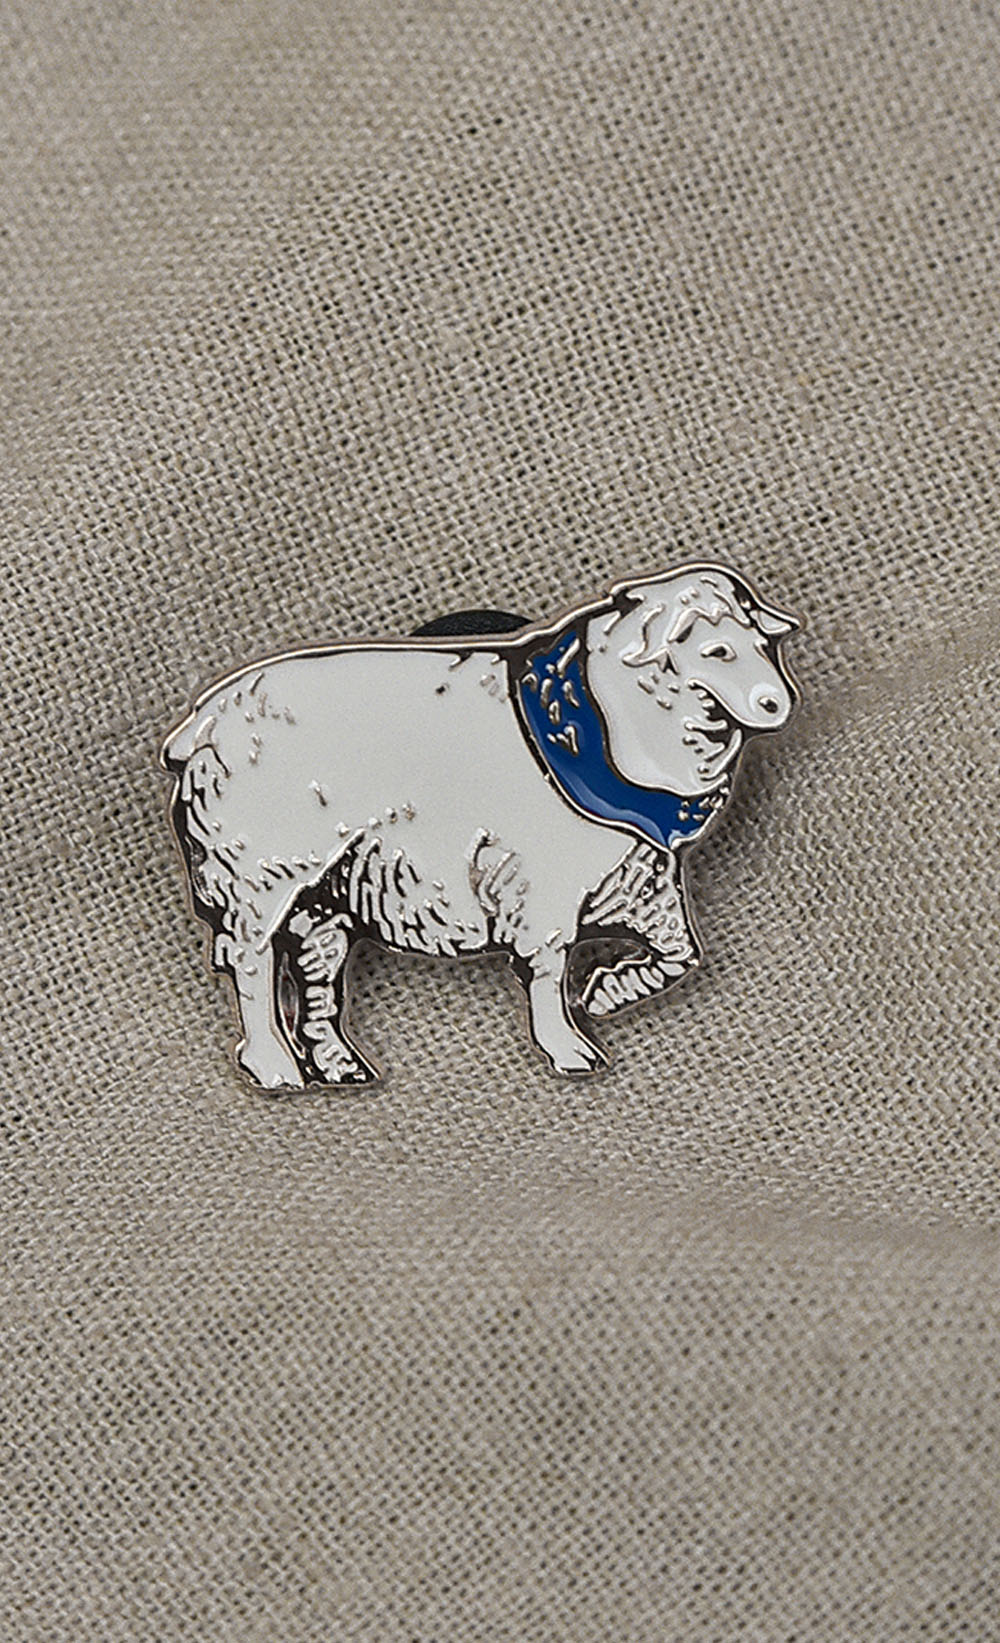 CutePinClub - Sheep Hard Enamel Pin